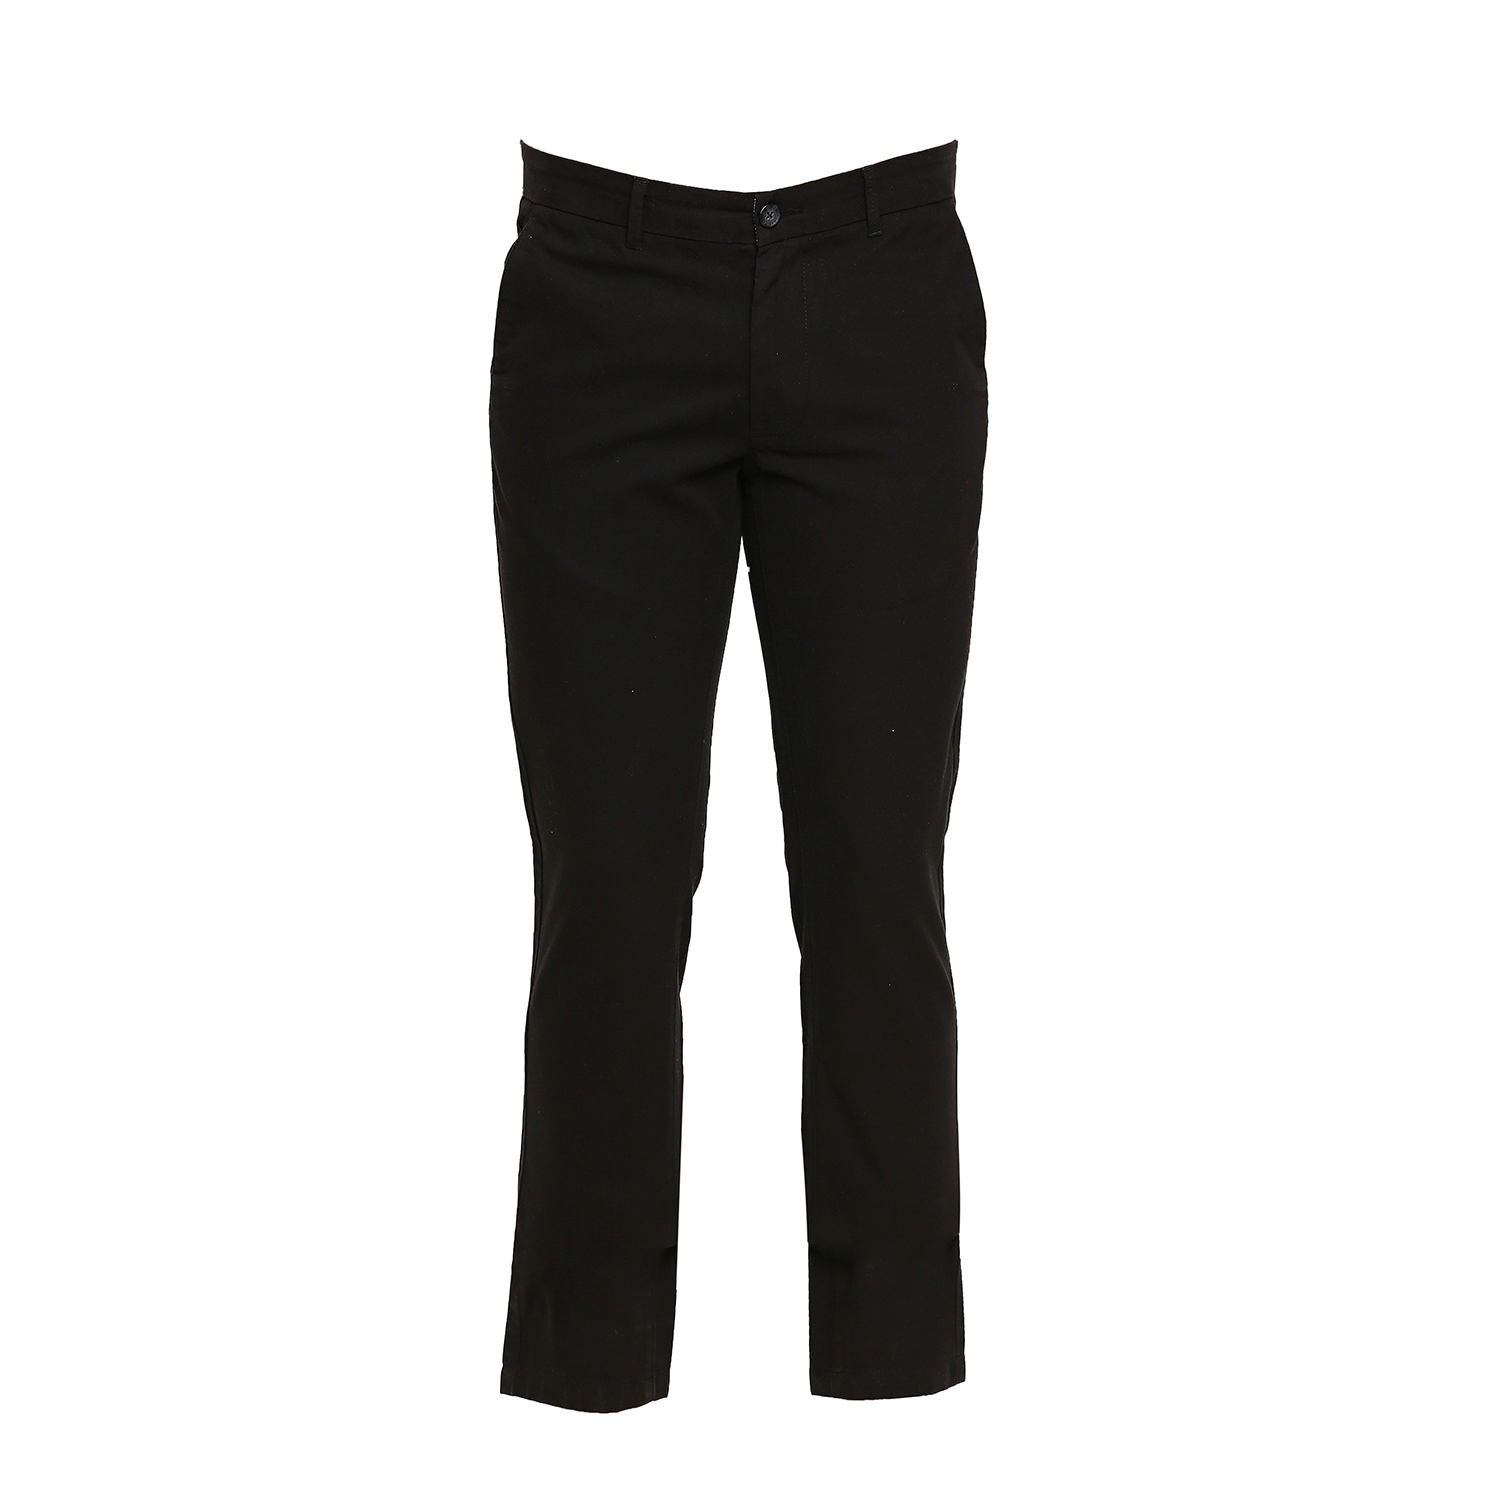 Basics | Men's Black Cotton Blend Solid Trouser 5